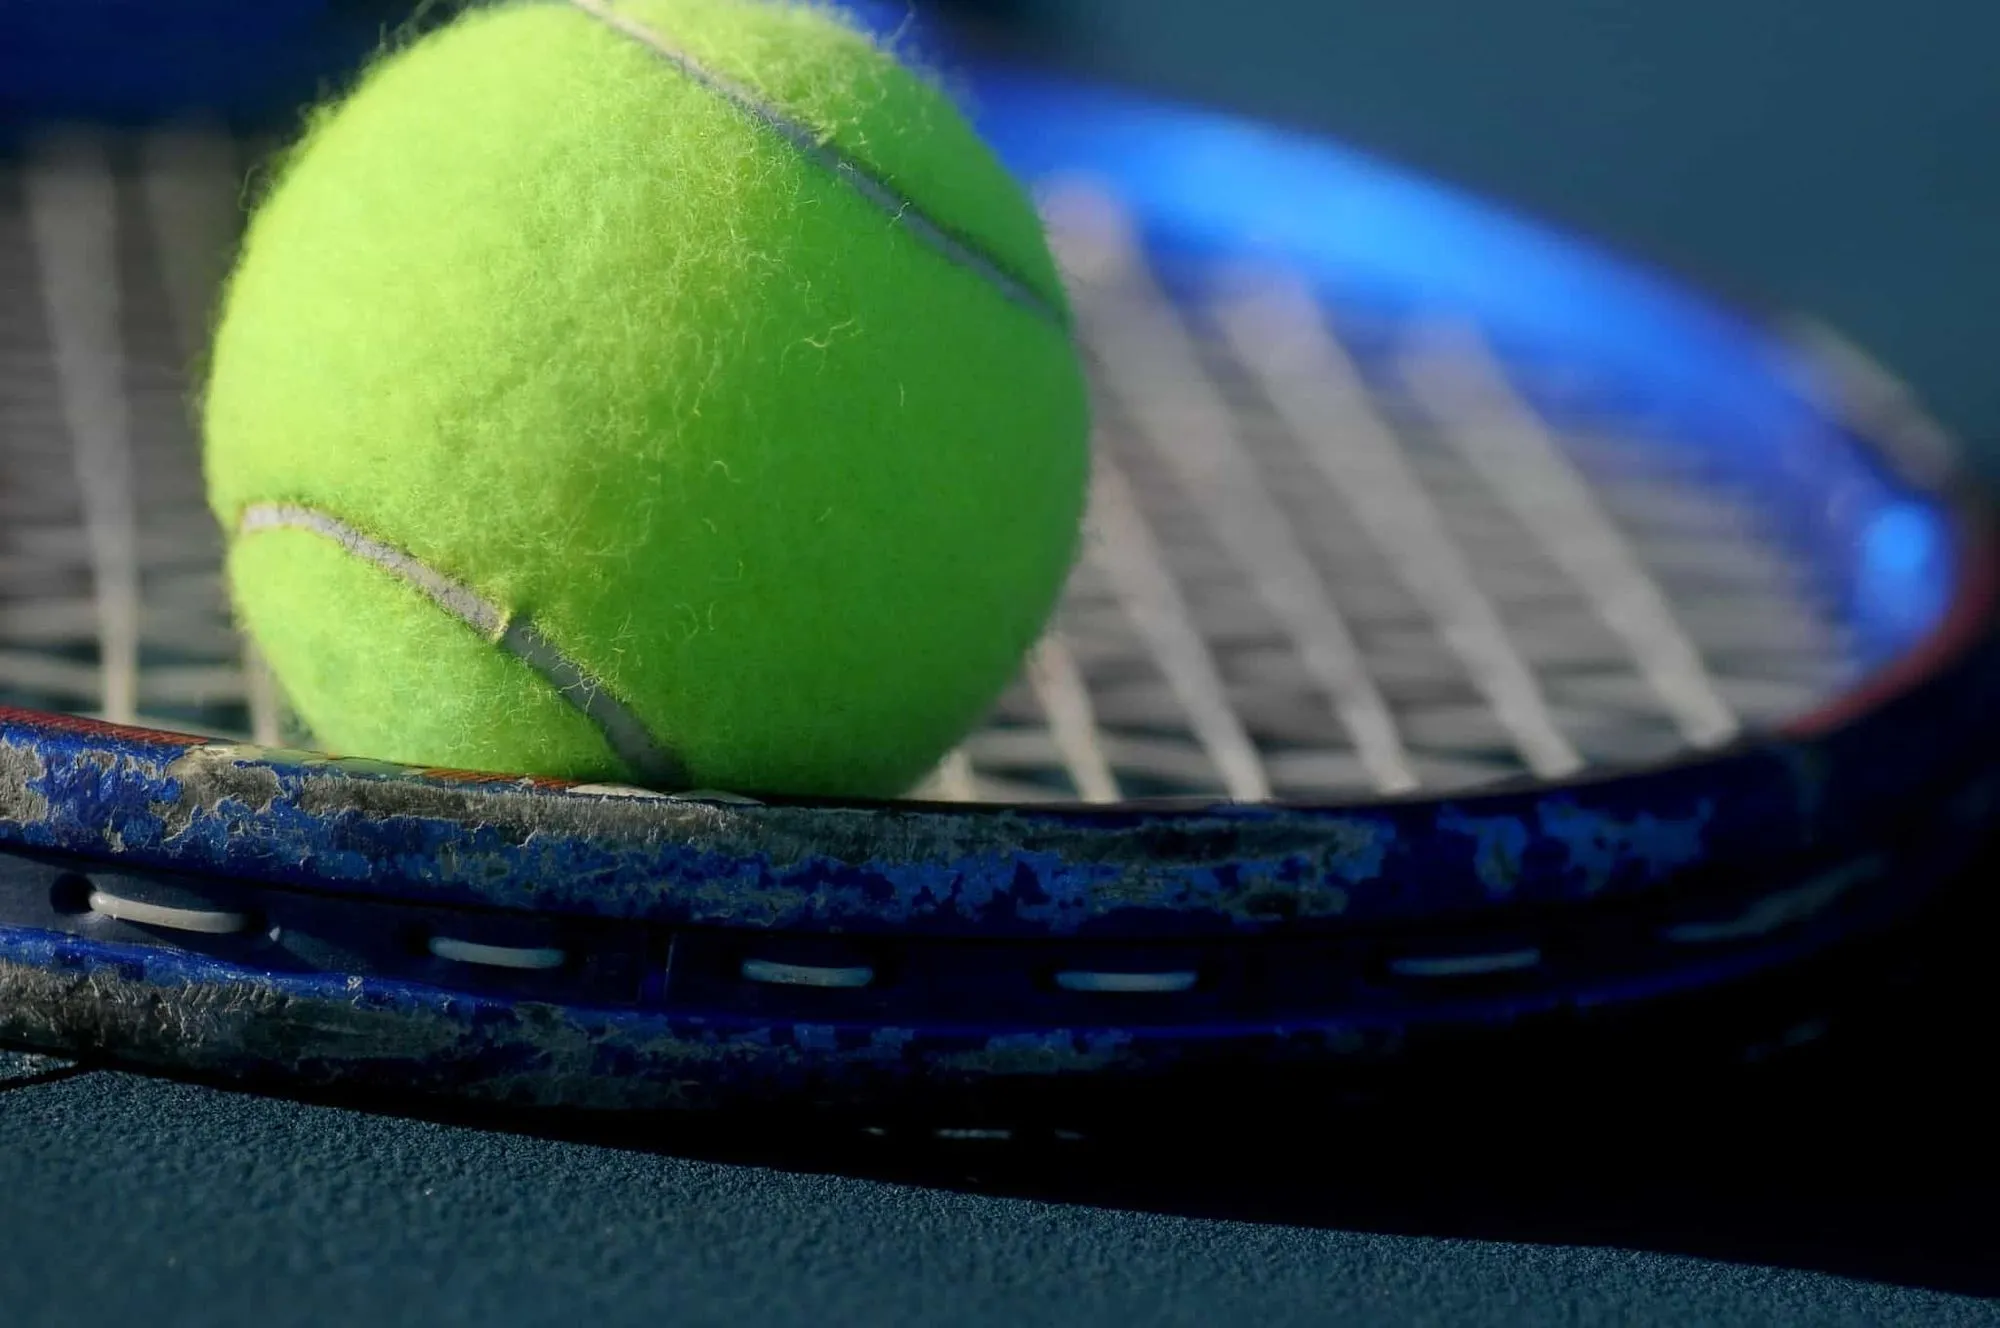 Close-up shot of tennis ball on racket.